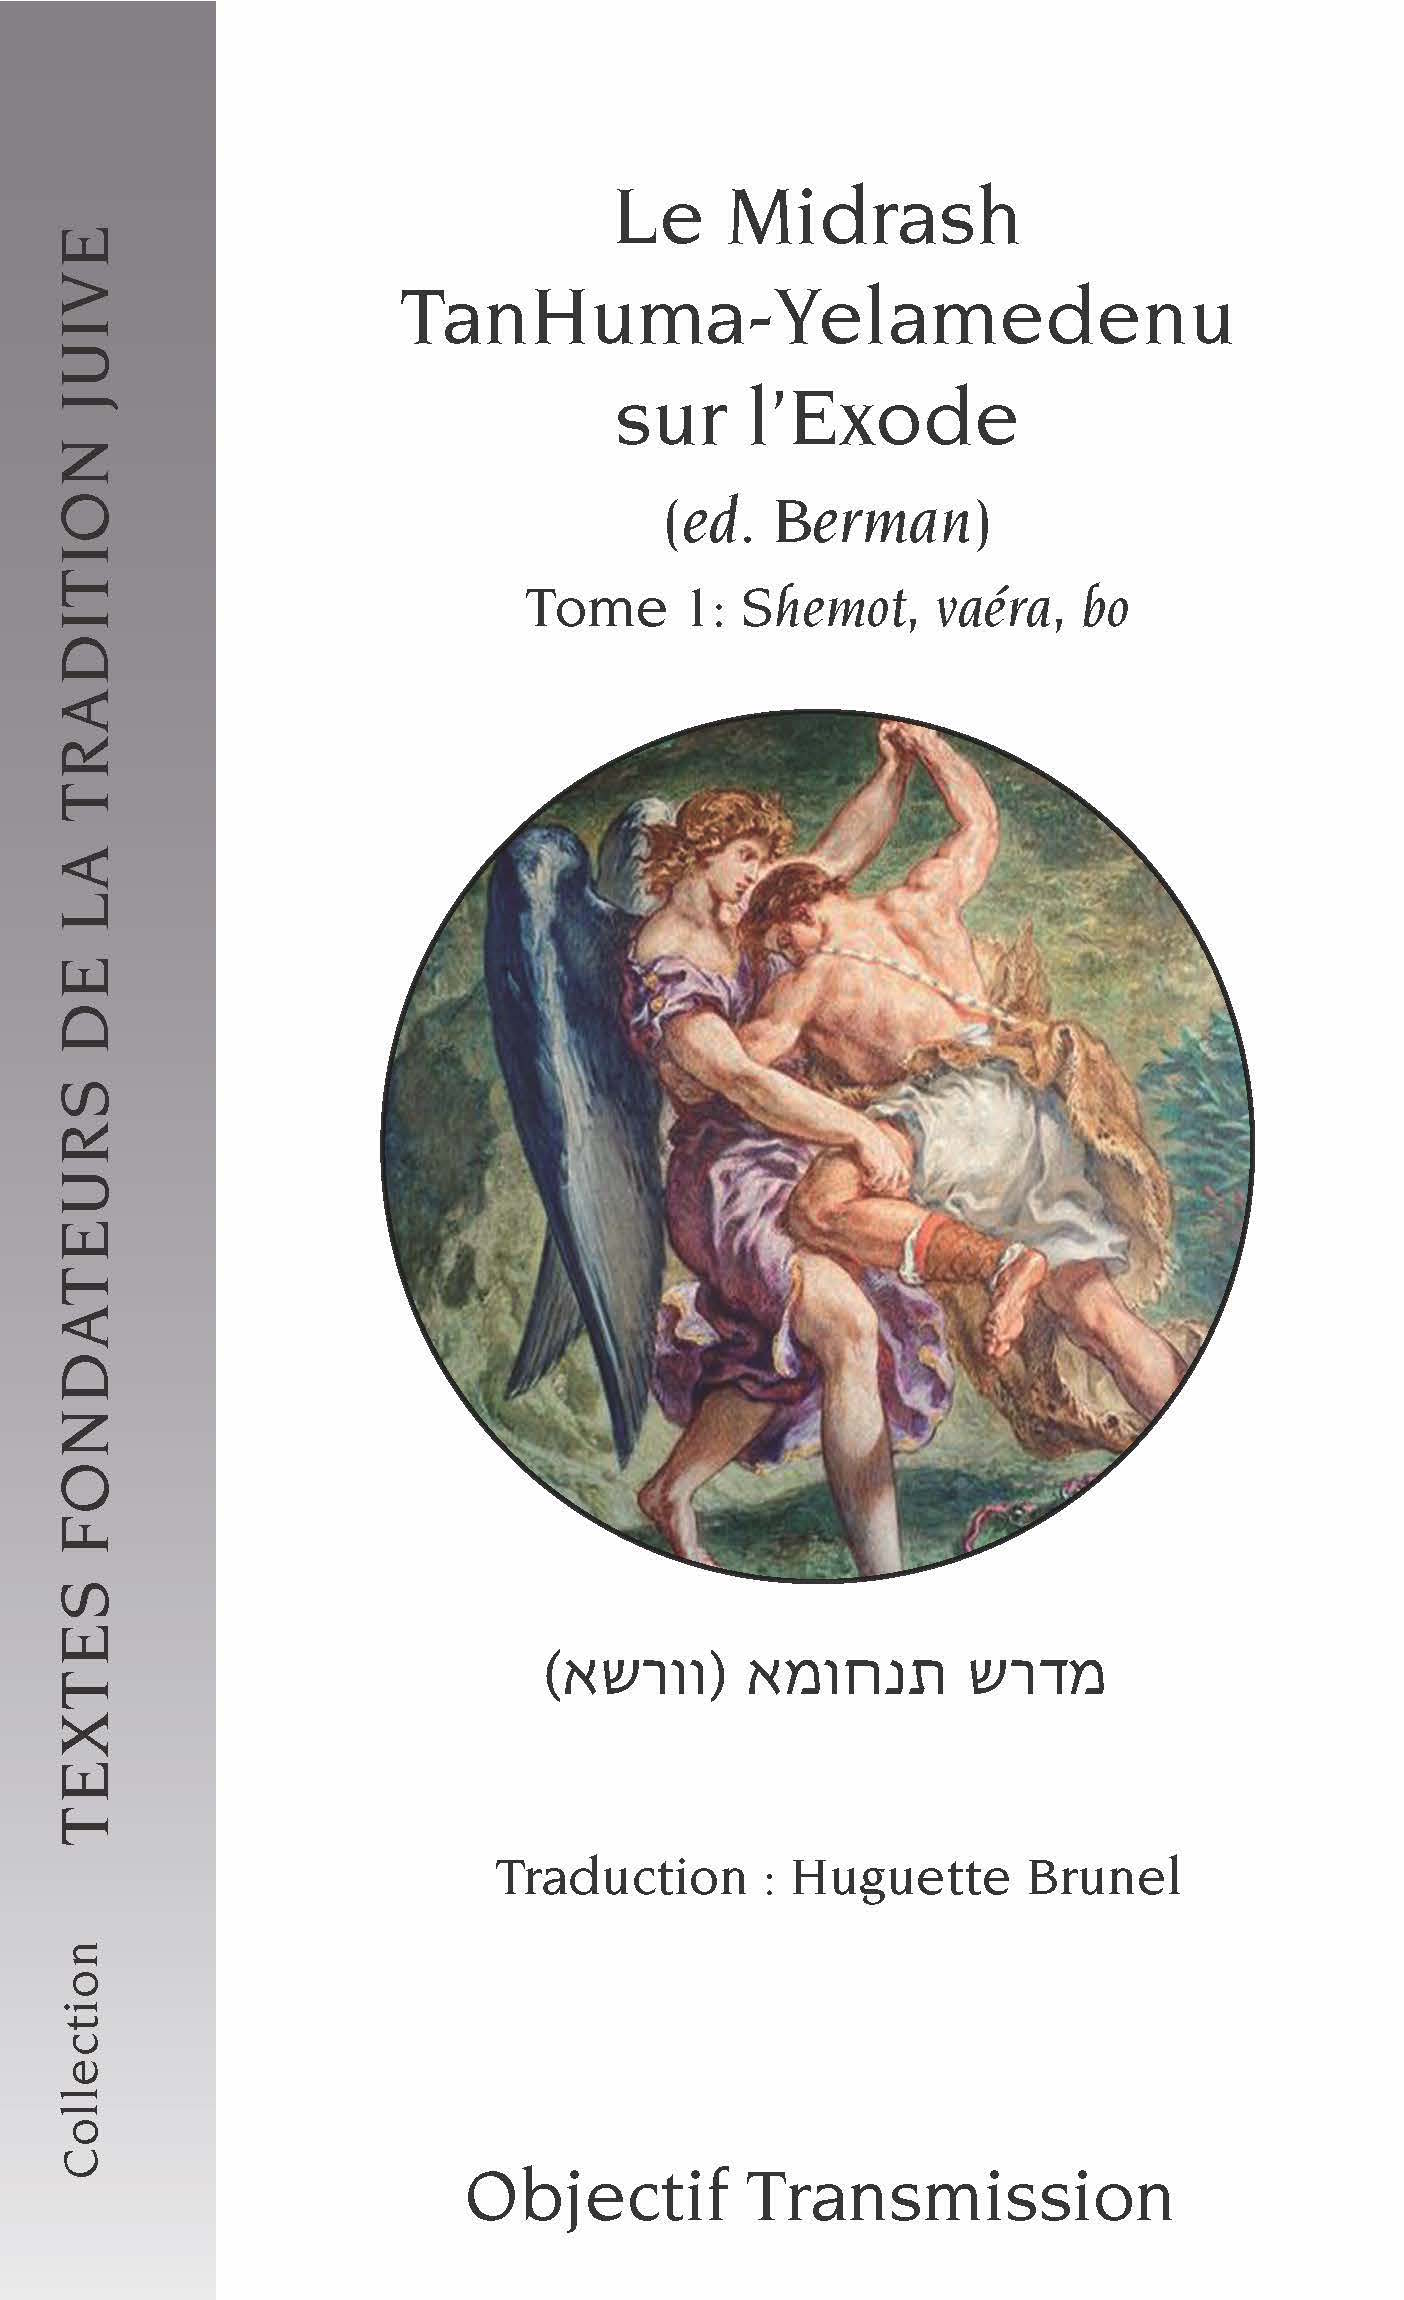 Le Midrash TanHuma-Yelamedenu sur l'Exode (version Berman) Tome 1 